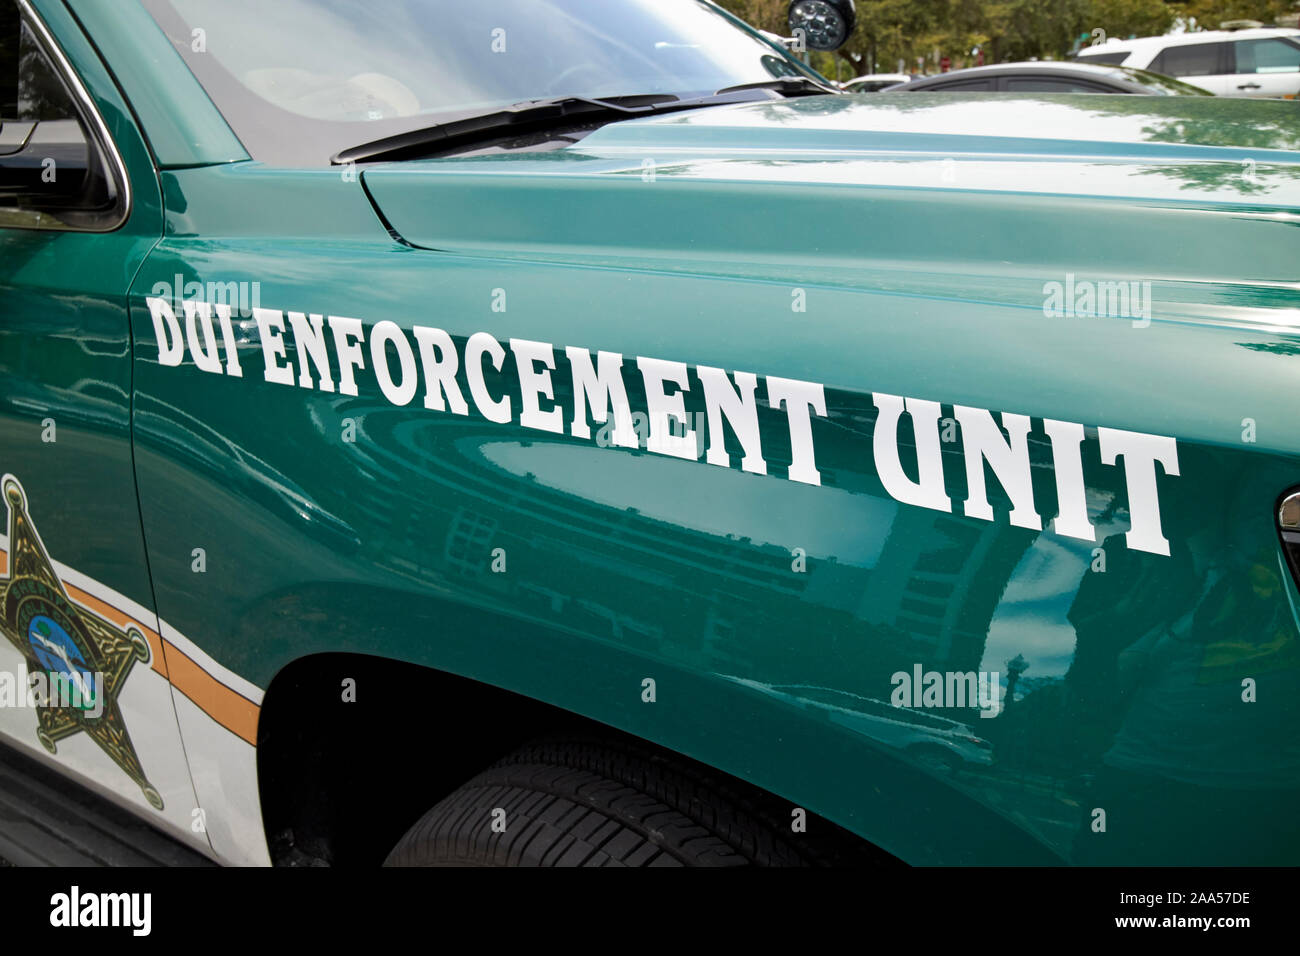 osceola county sheriff department ford police explorer dui enforcement unit patrol vehicle suv florida usa Stock Photo